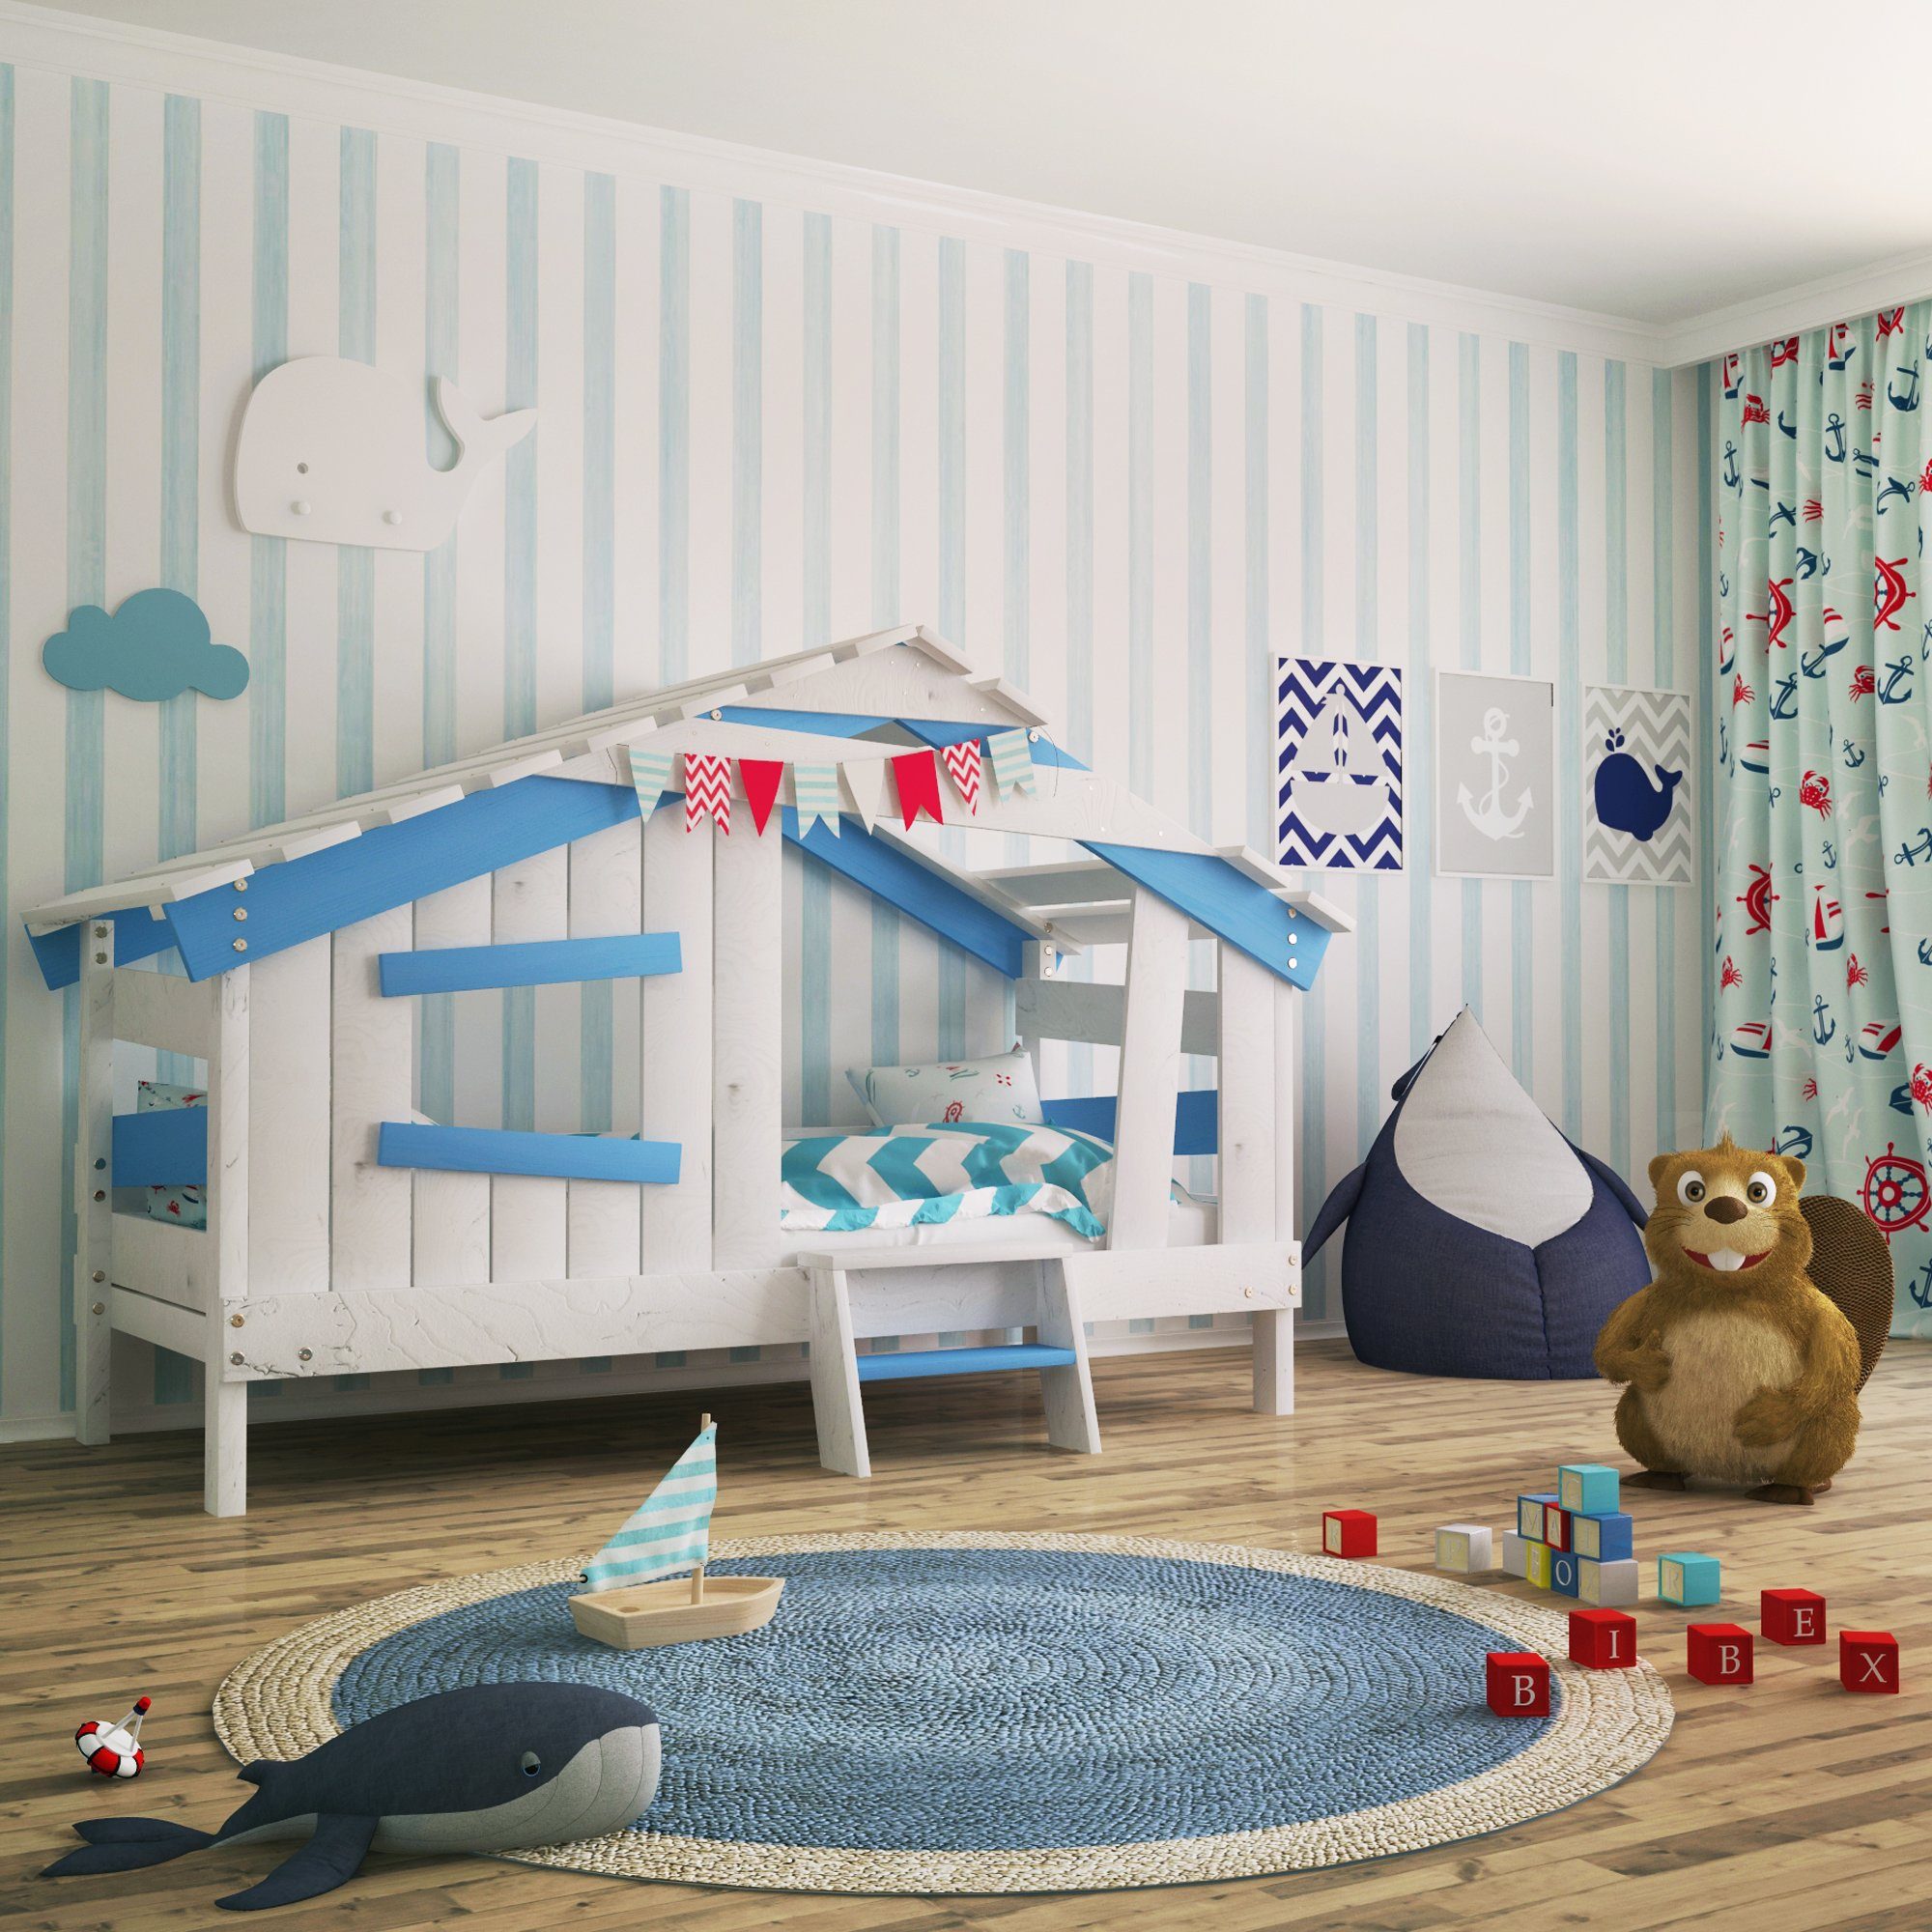 bibex Kinderbett APART CHALET Kinderbett, Jugendbett, Spielbett, himmel-blau